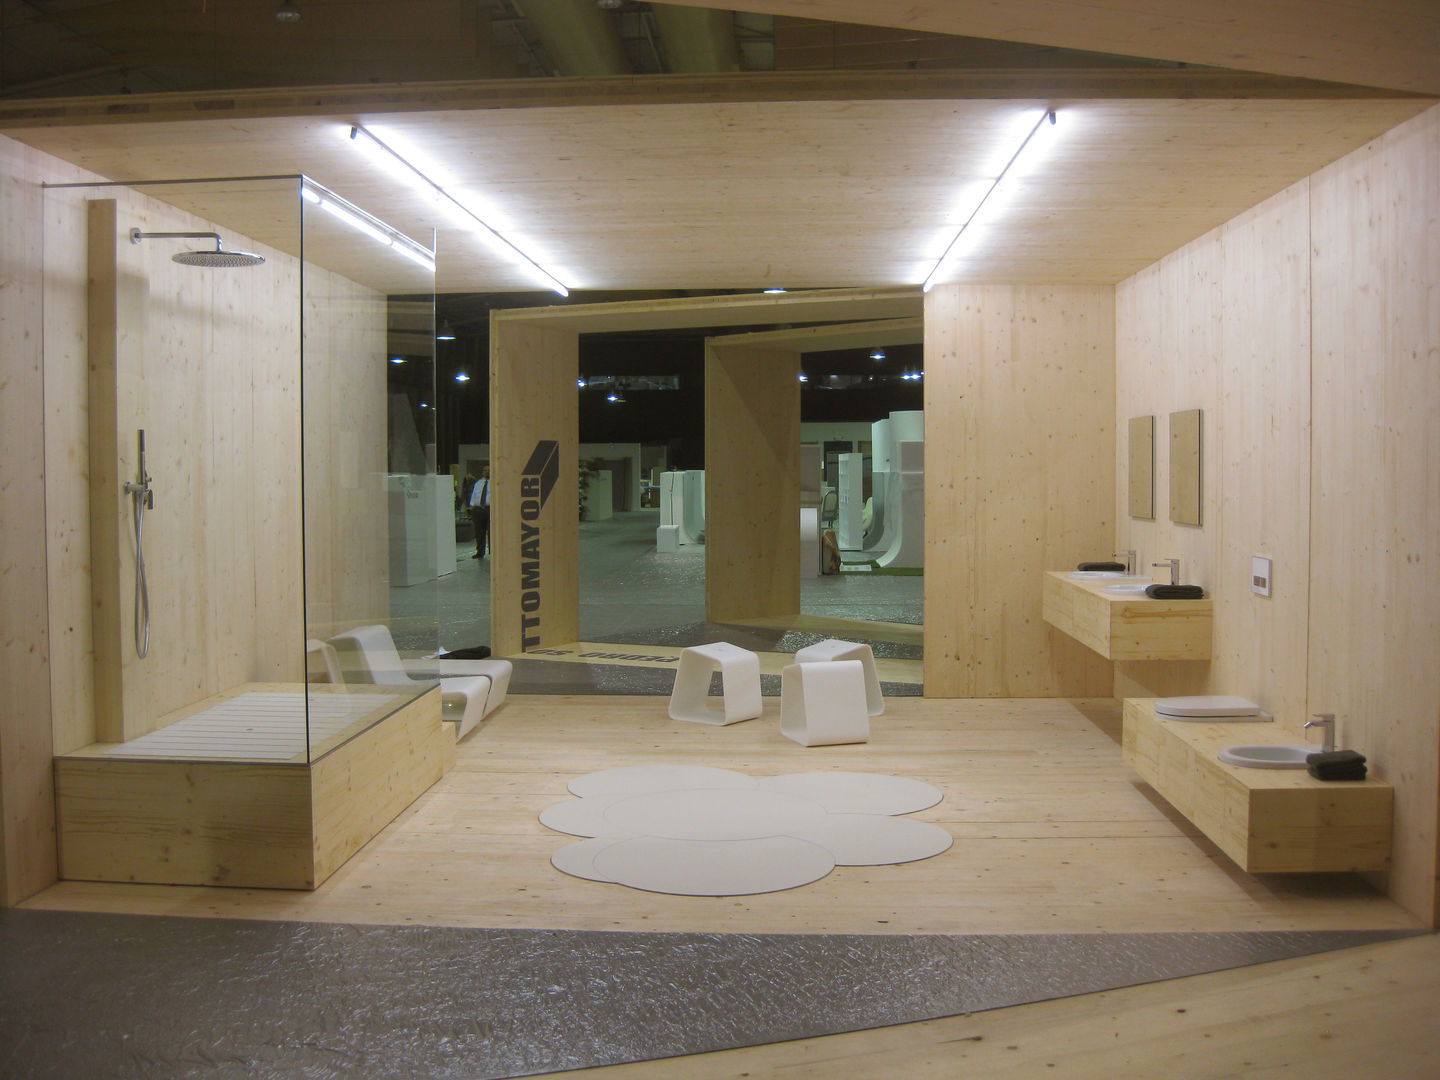 BOOM/CRUSH/MATCH, Pedro Sottomayor Design Industrial Pedro Sottomayor Design Industrial ห้องน้ำ ของแต่งห้องน้ำ